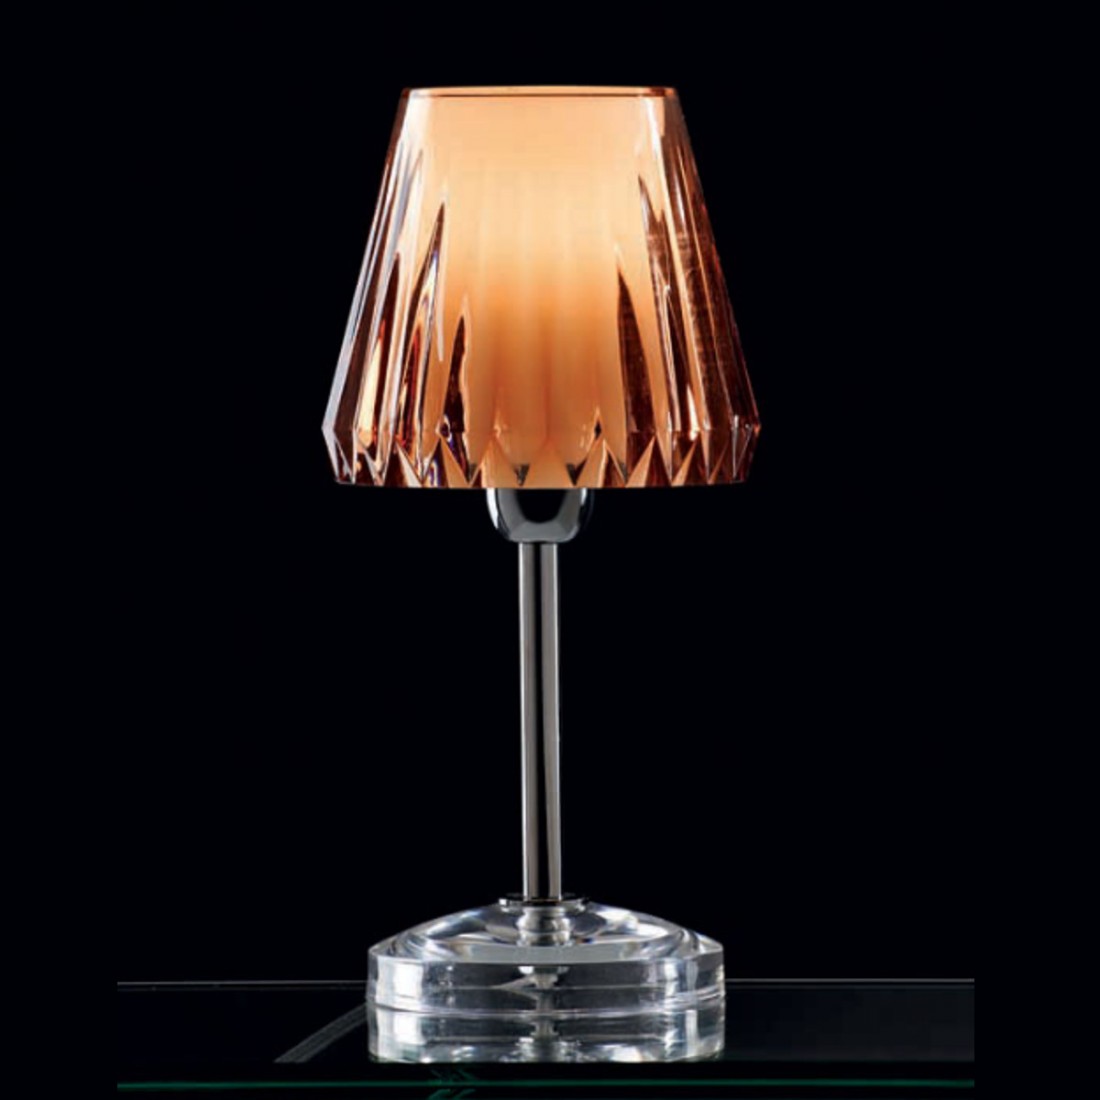 Abat-jour moderno illuminando gaia lu led lampada tavolo acrilico tortora viola trasparente interno e14, colore tortora